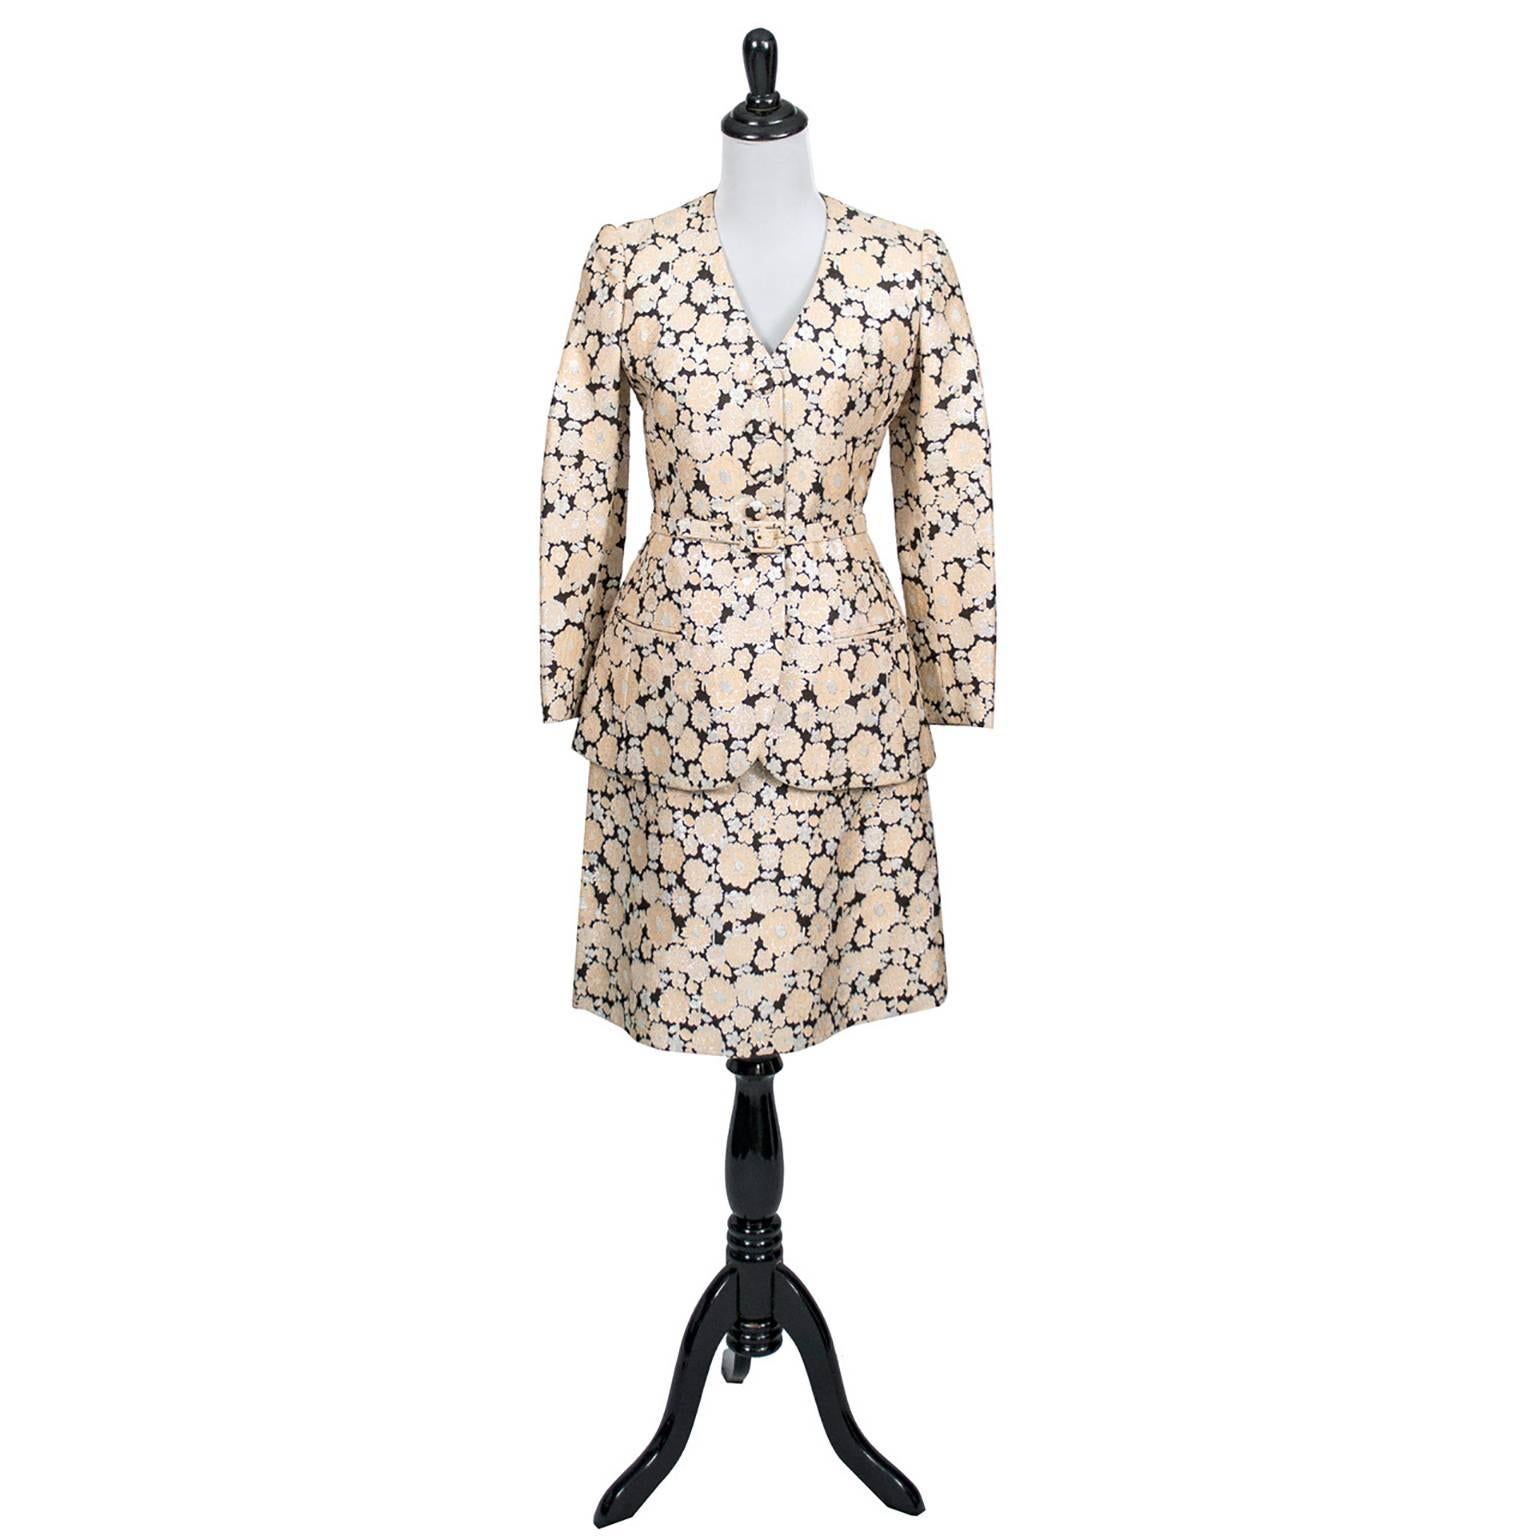 Beige 1960s Metallic Vintage Brocade Skirt Suit from Prominent Estate Size 4/6